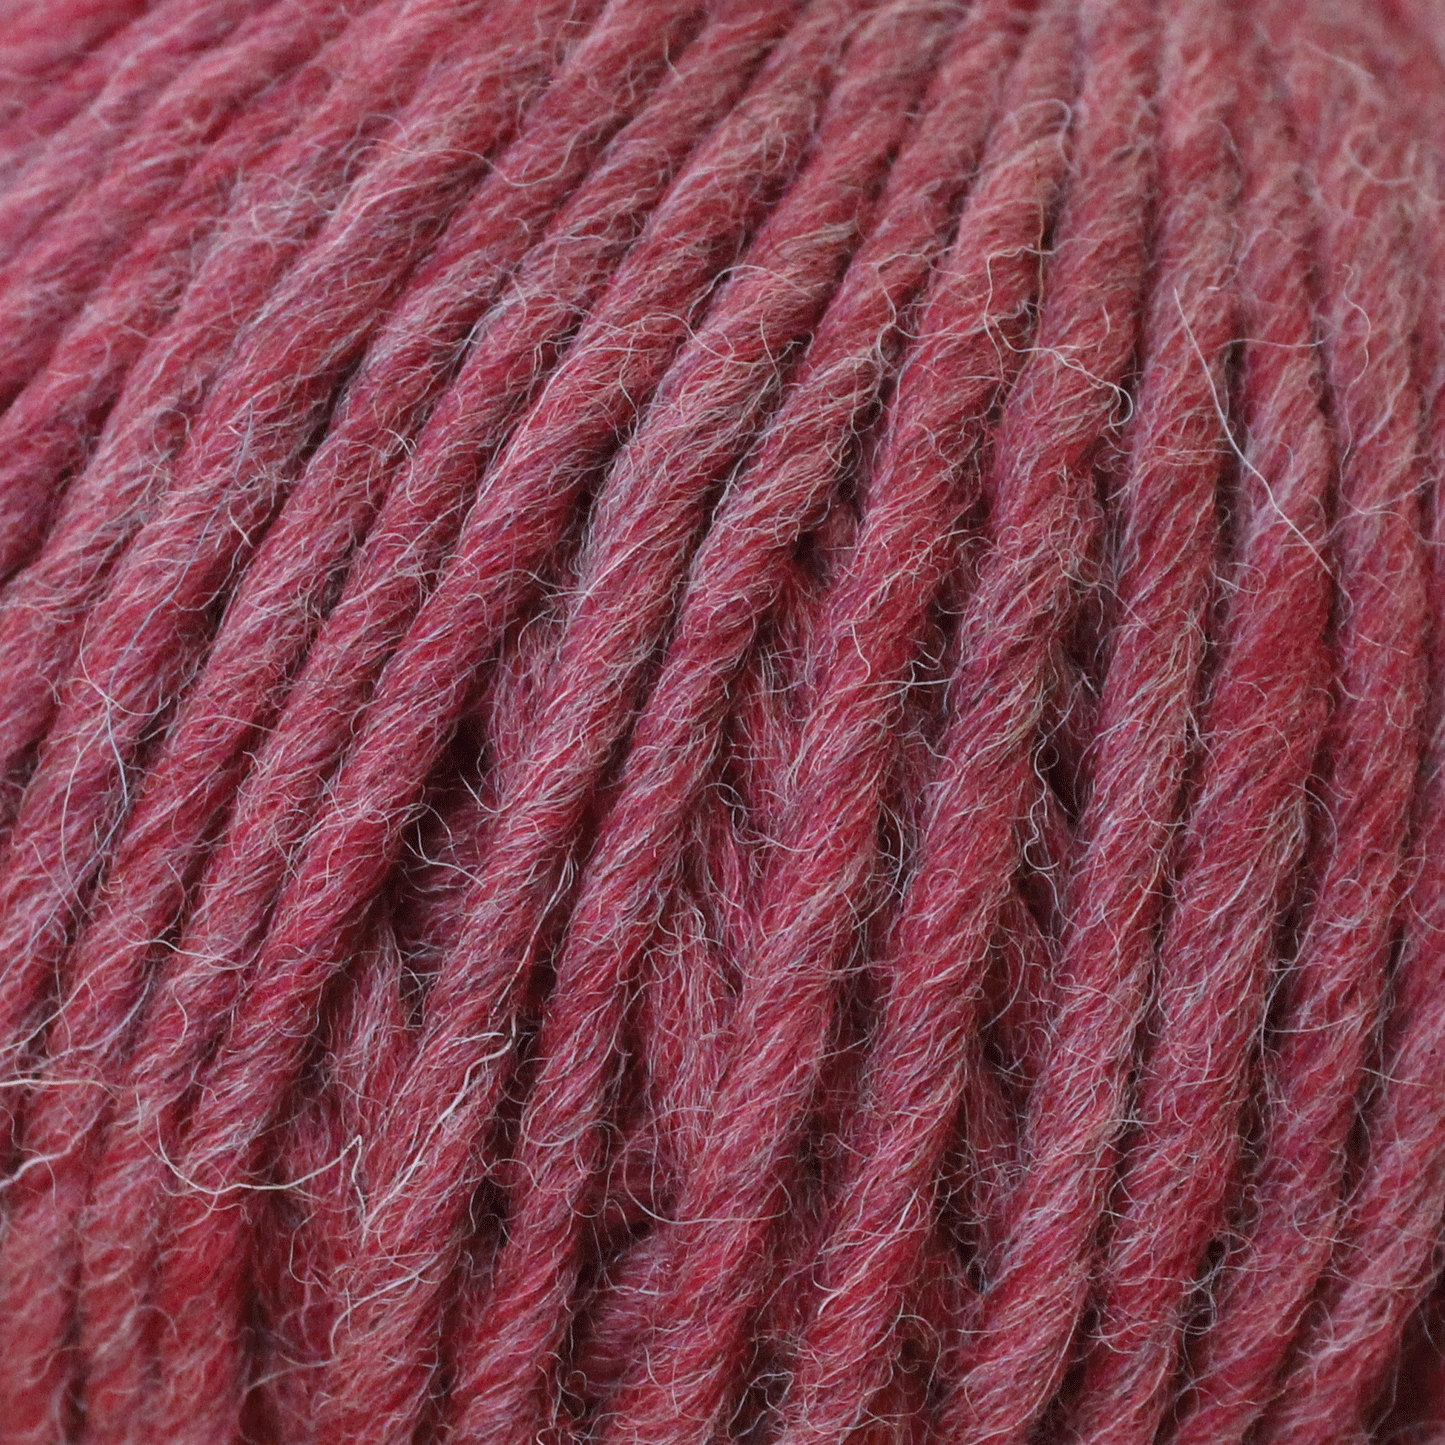 Natural Meadow Chunky 100% British Hand Knitting Wool